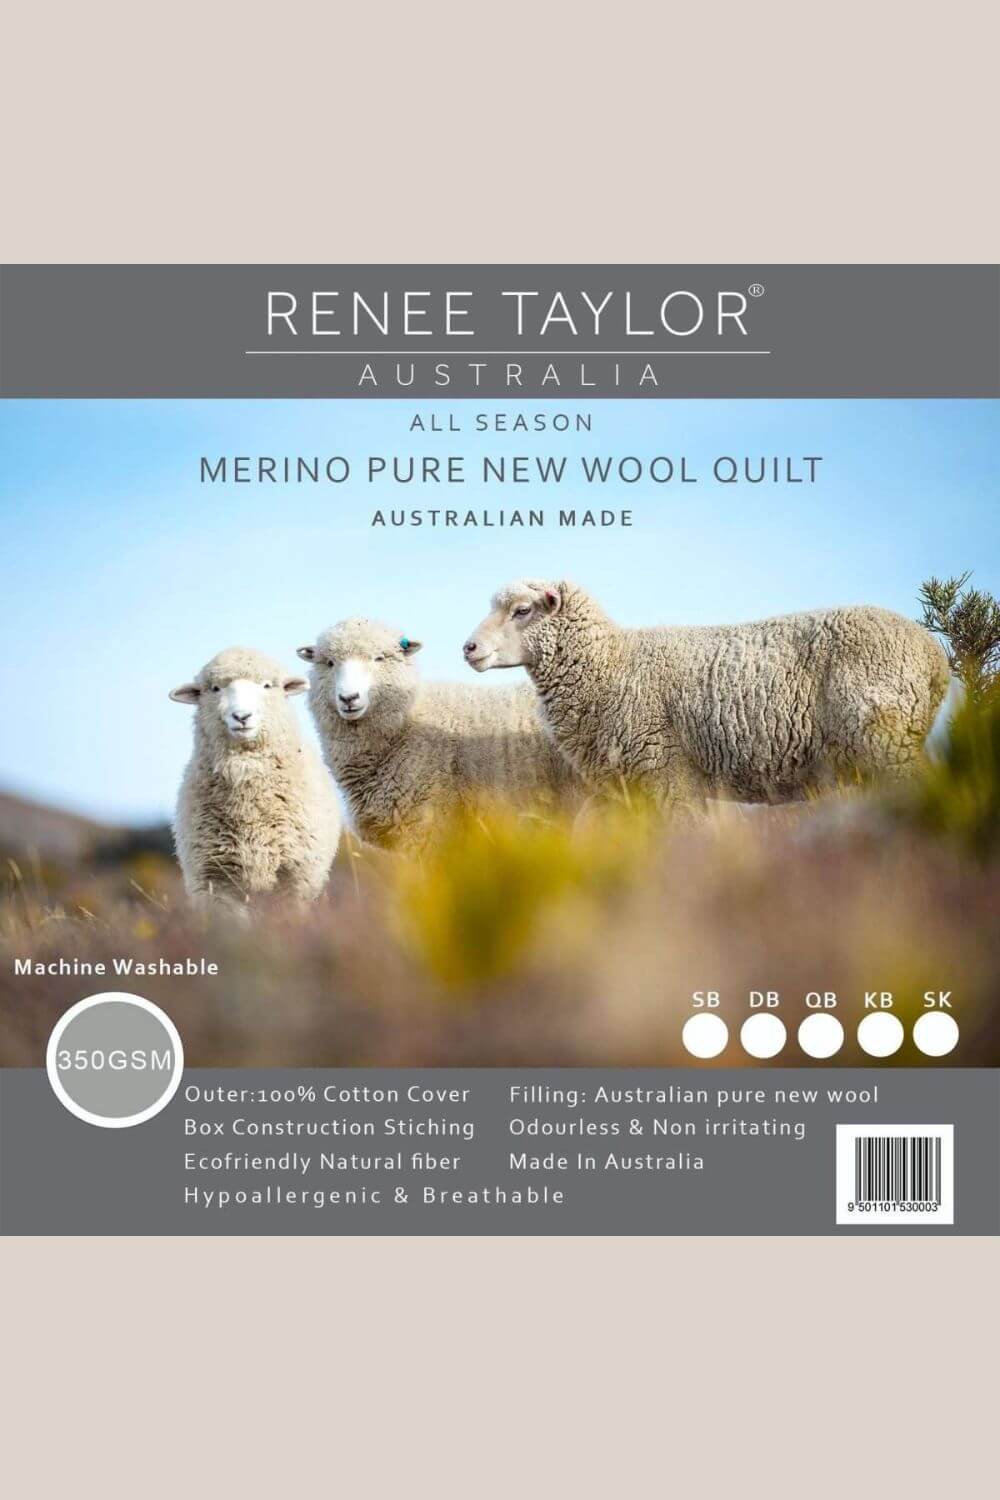 Renee Taylor Australian Pure Merino Wool Quilt 350GSM - Double